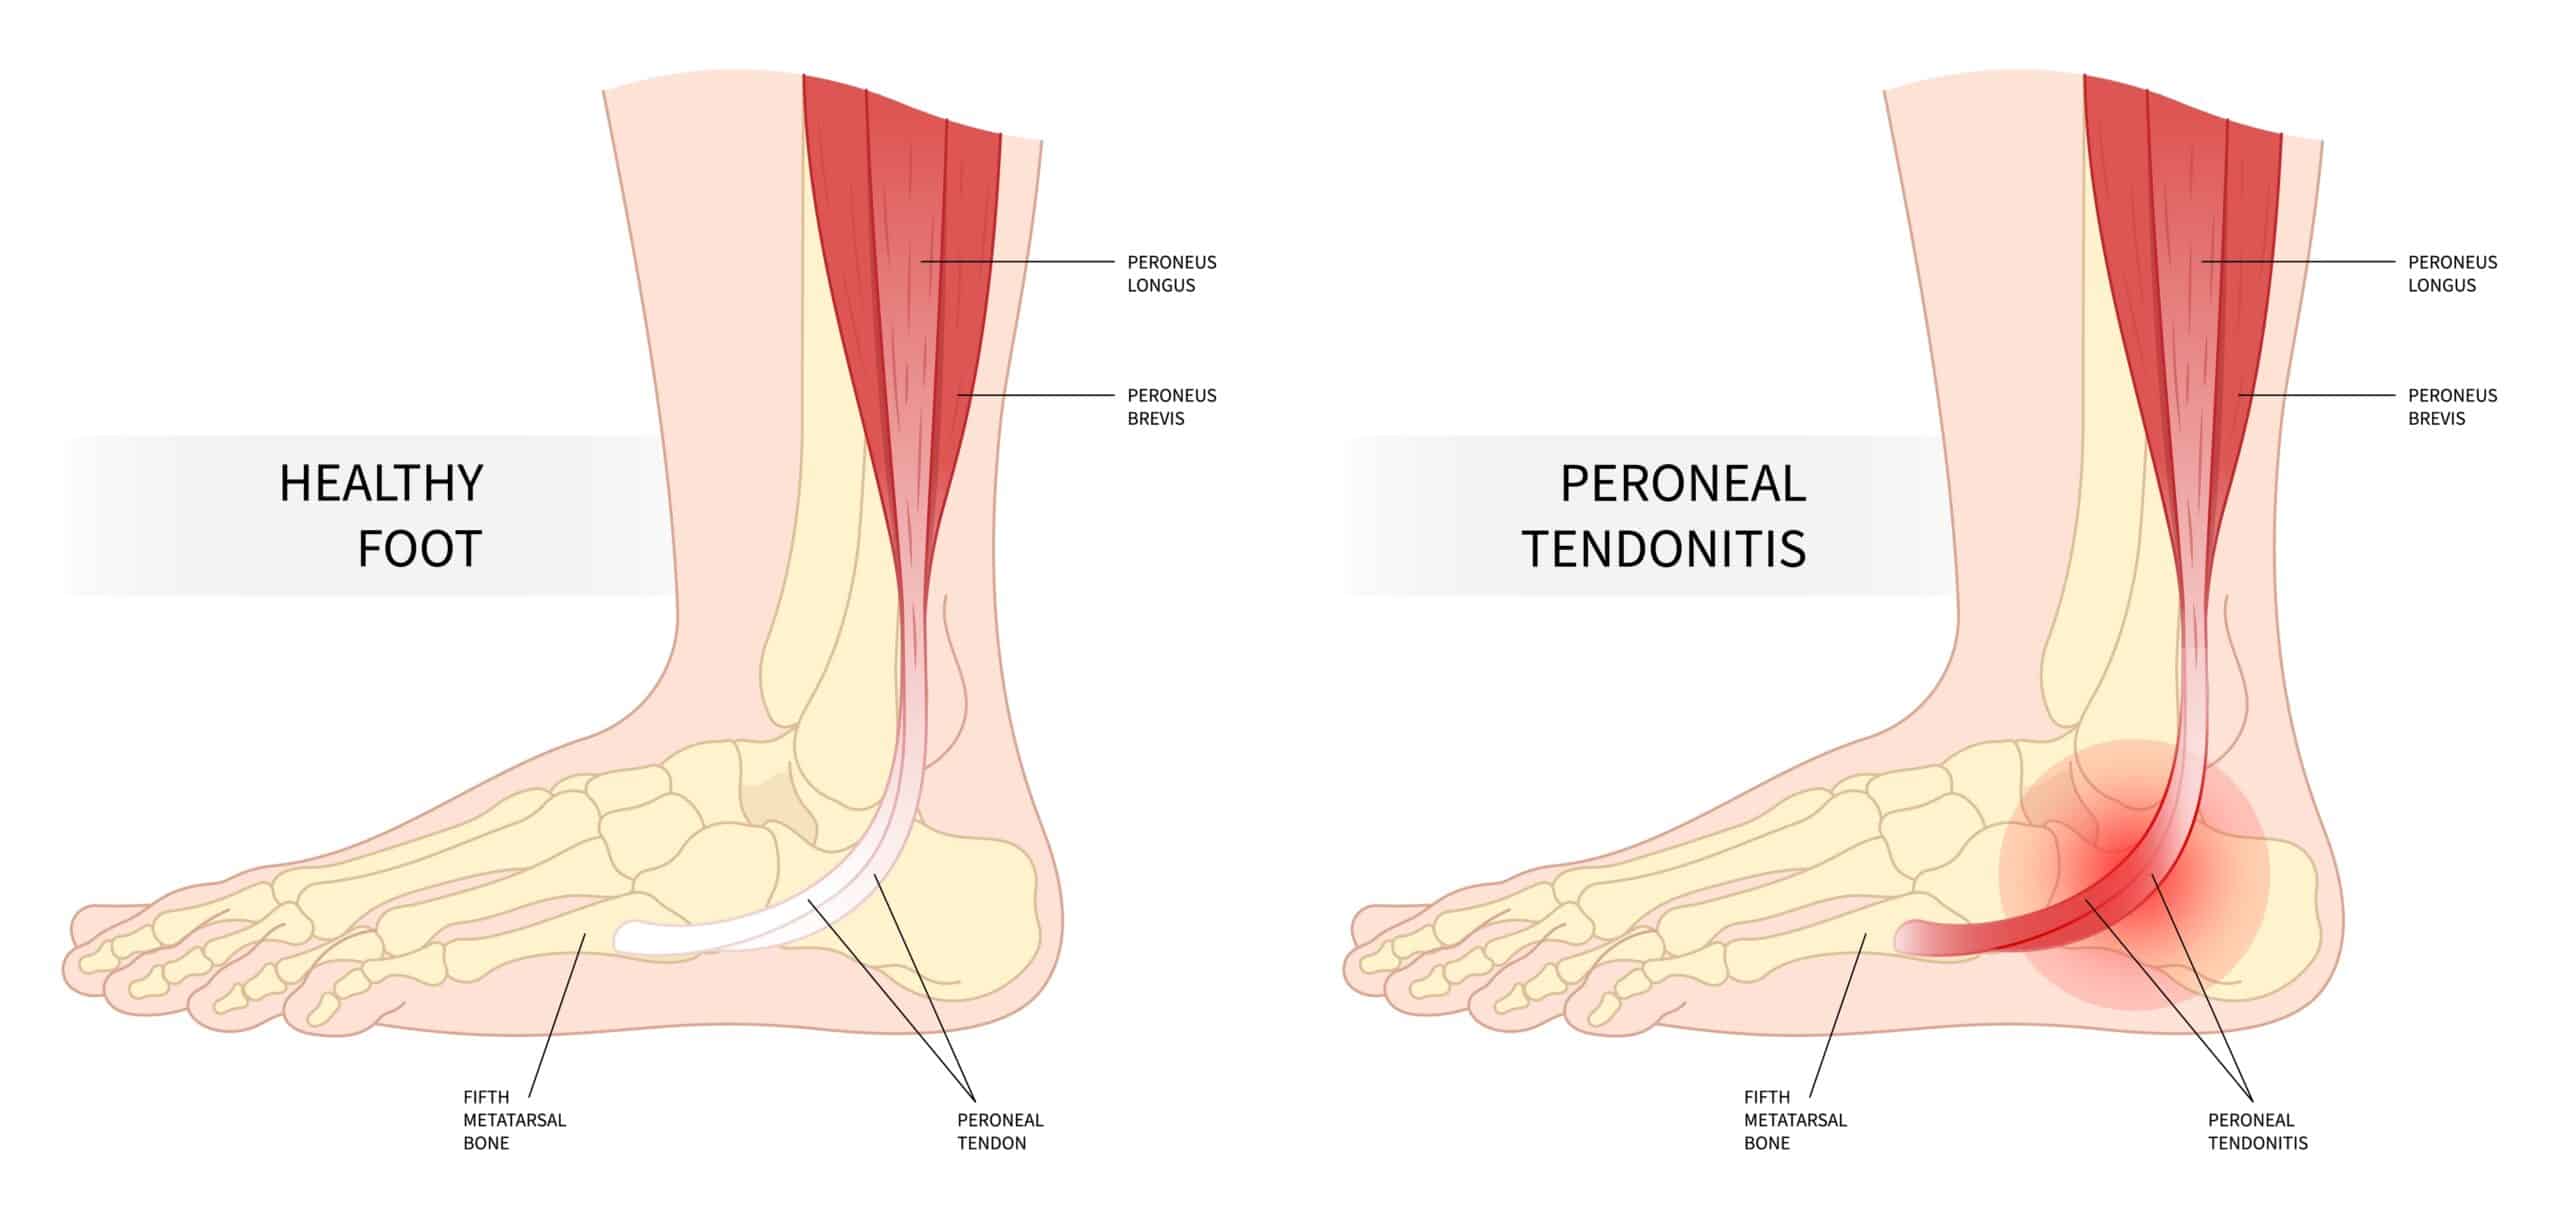 Peroneal-Tendontis-Diagram-scaled